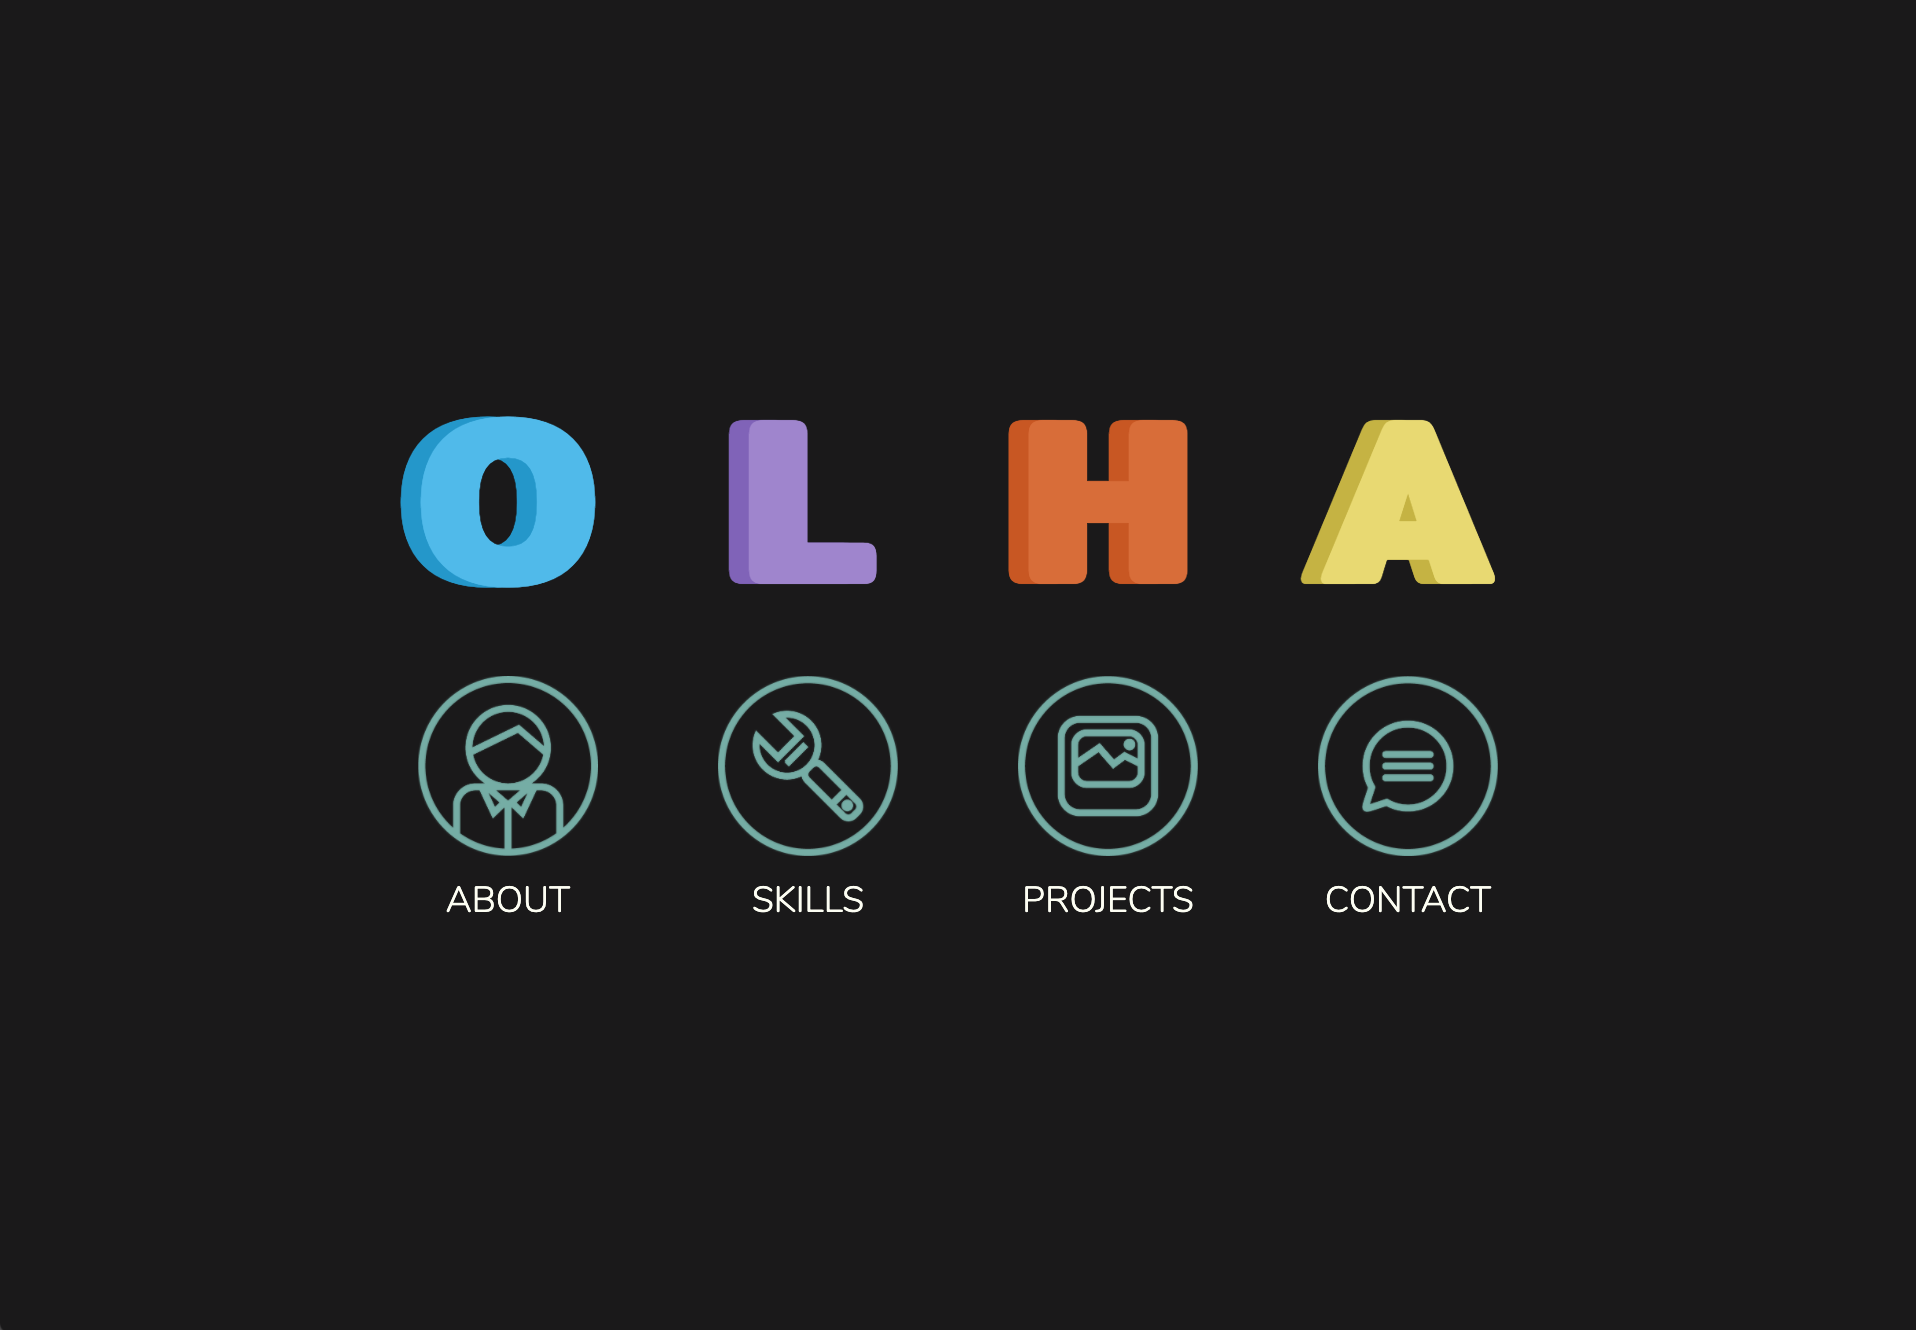 Olha's portfolio's homepage